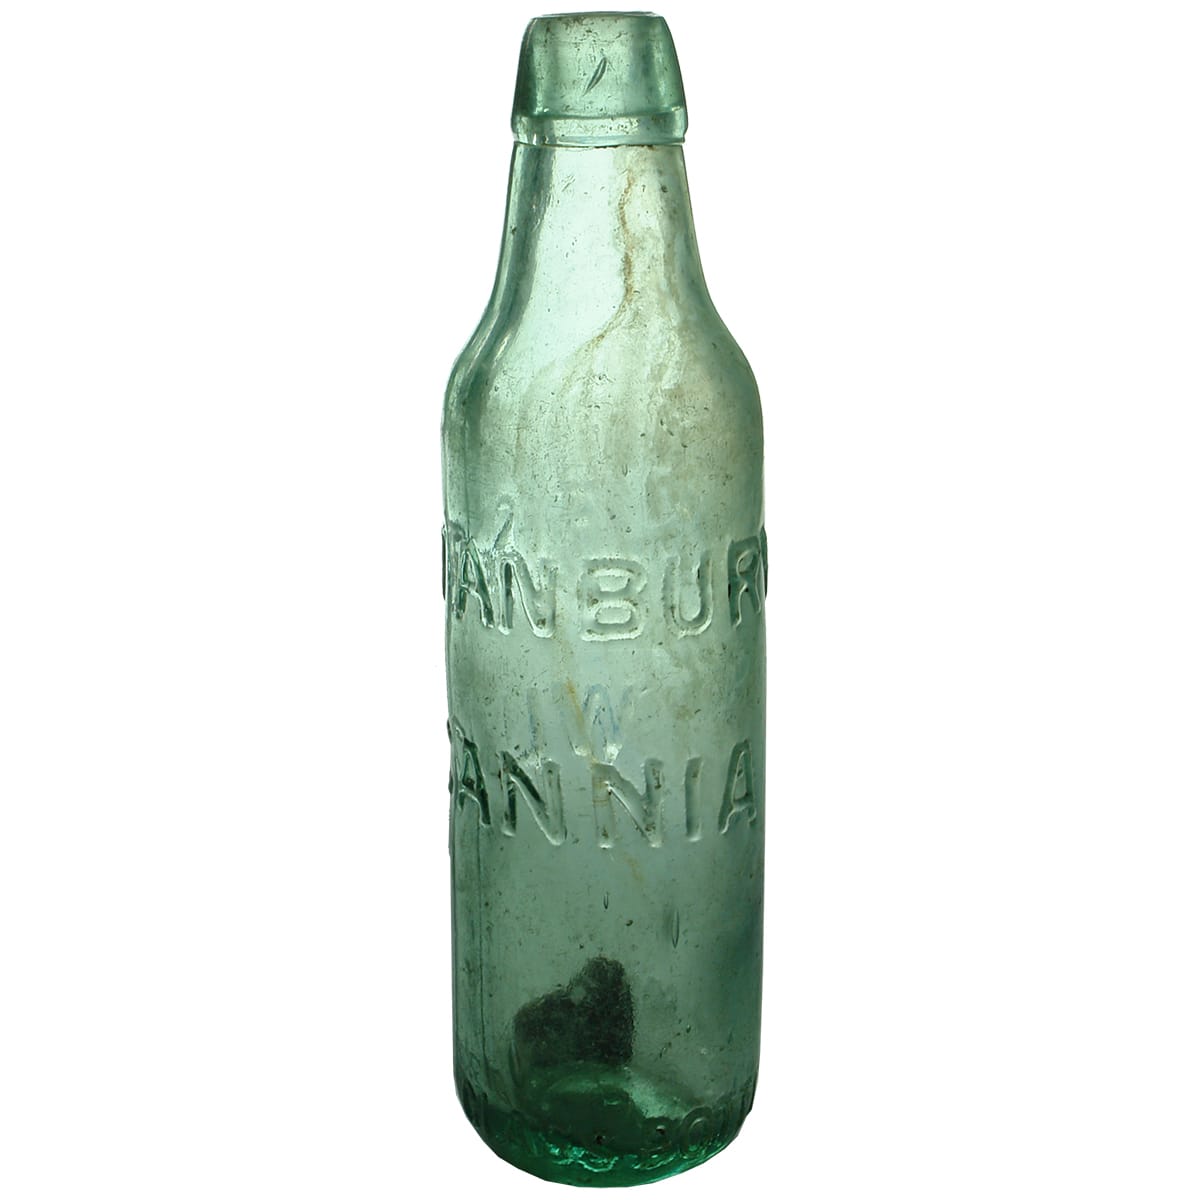 Lamont. Stanbury, Wilcannia. Melbourne Glass Bottle Co. Aqua. 10 oz.